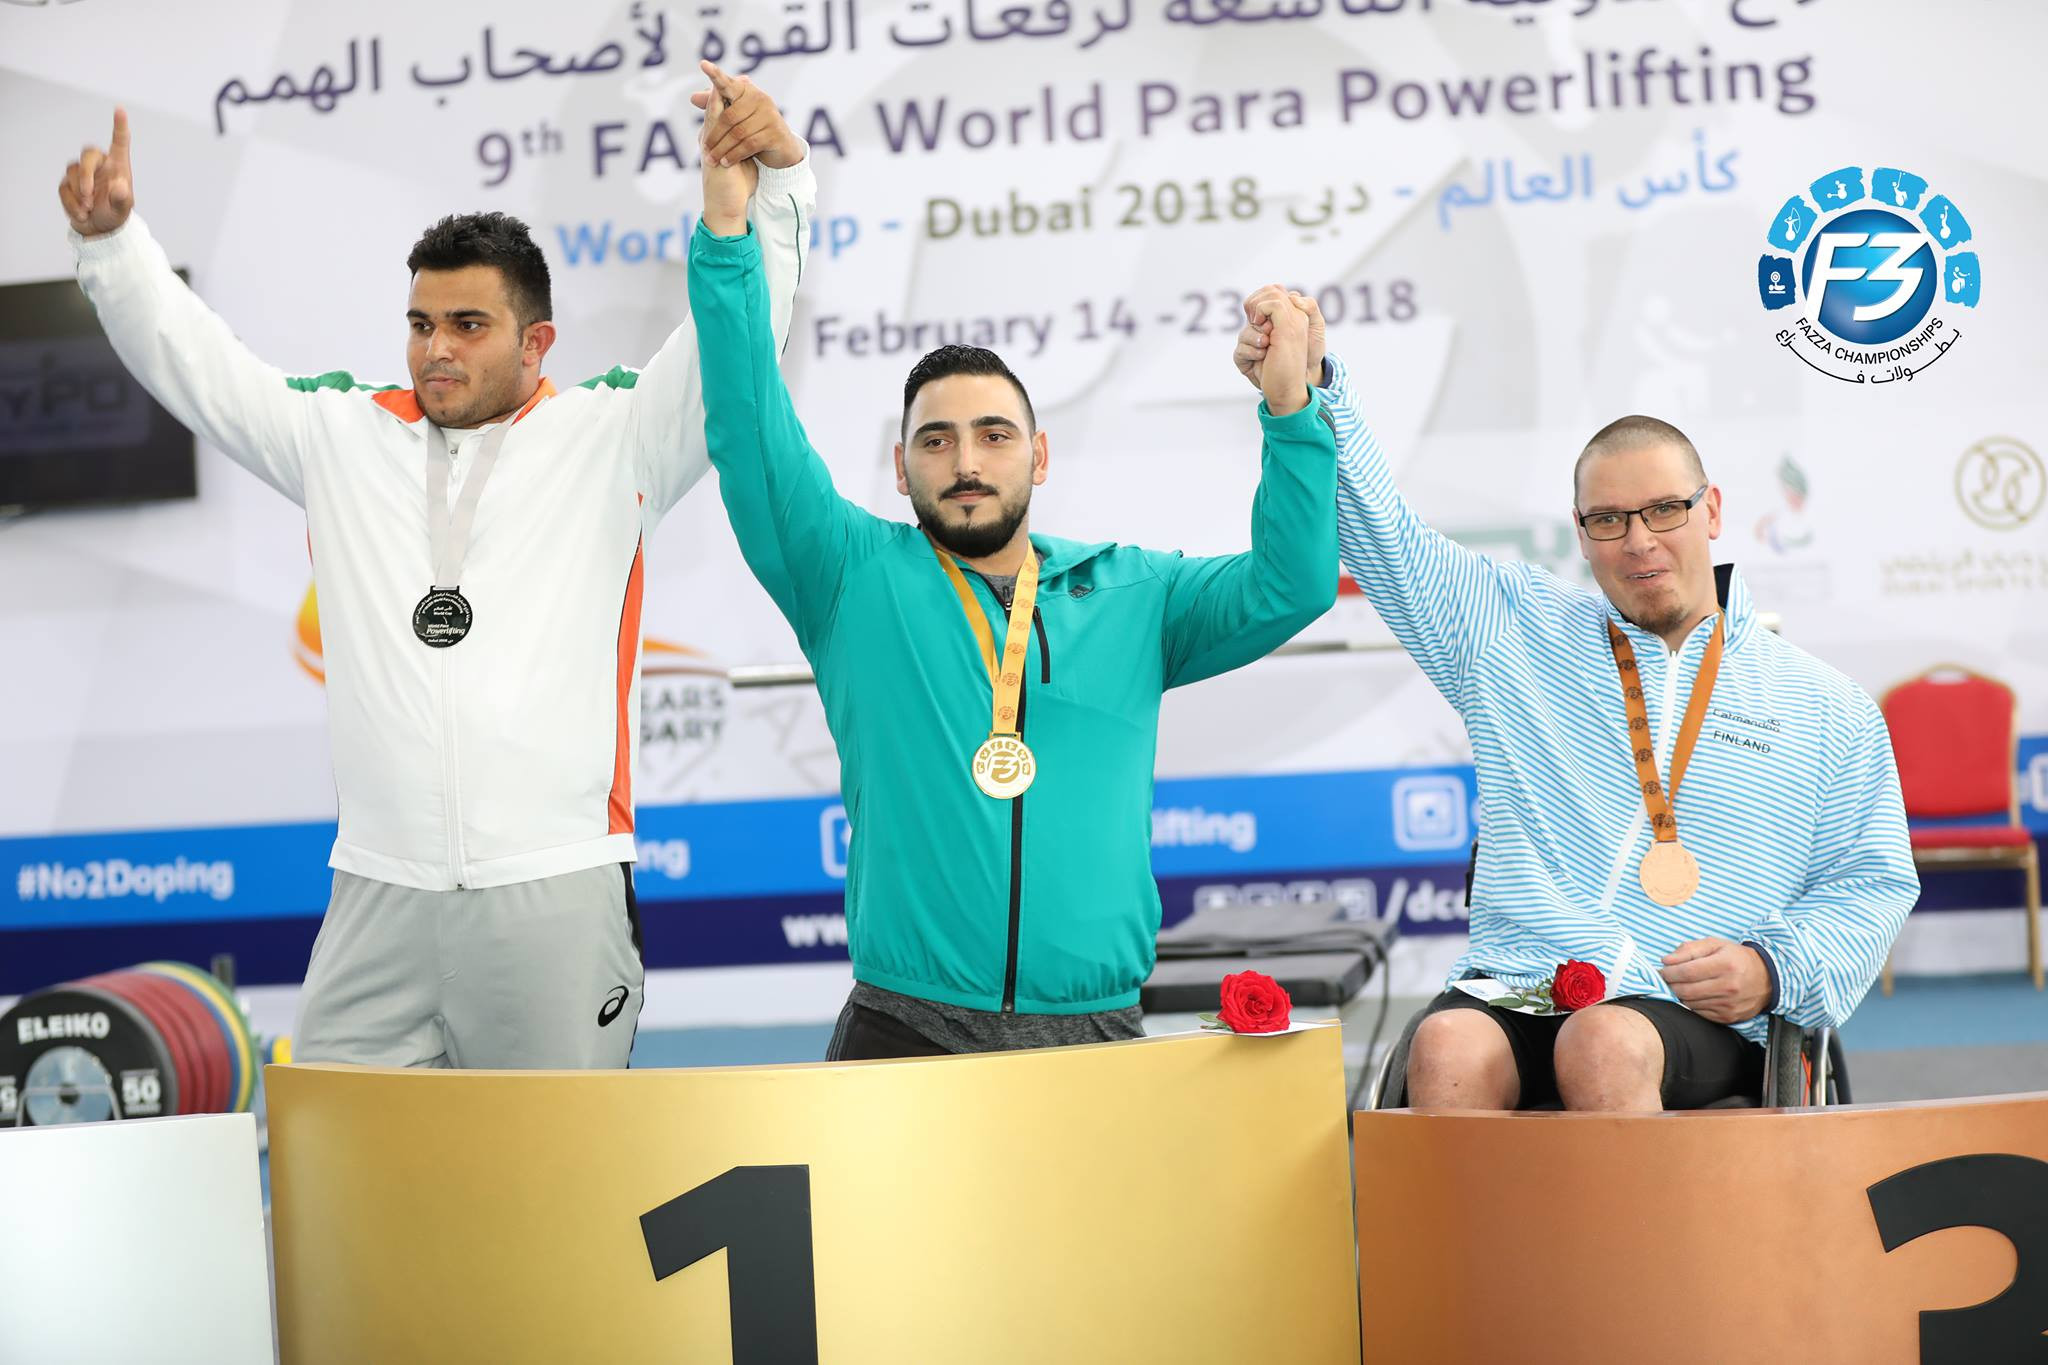 Abdelkareem Khattab claimed gold in the World Para Powerlifting World Cup in Dubai ©IPC